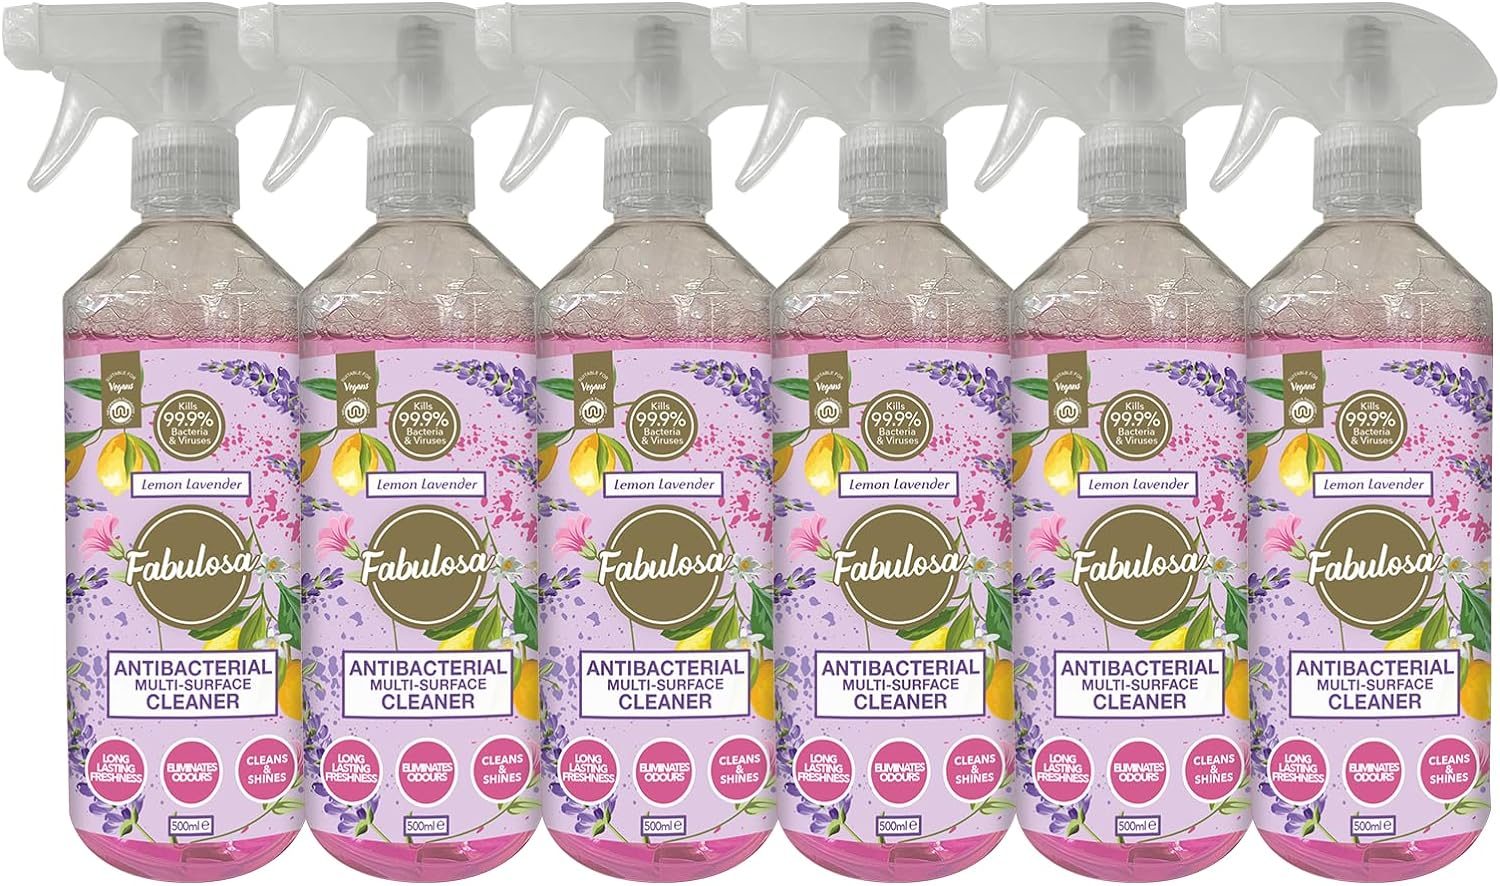 Fabulosa Antibacterial Disinfectant Spray, All Purpose Multi Surface Cleaner, 500ml, 6 pack, Lemon Lavender 2310